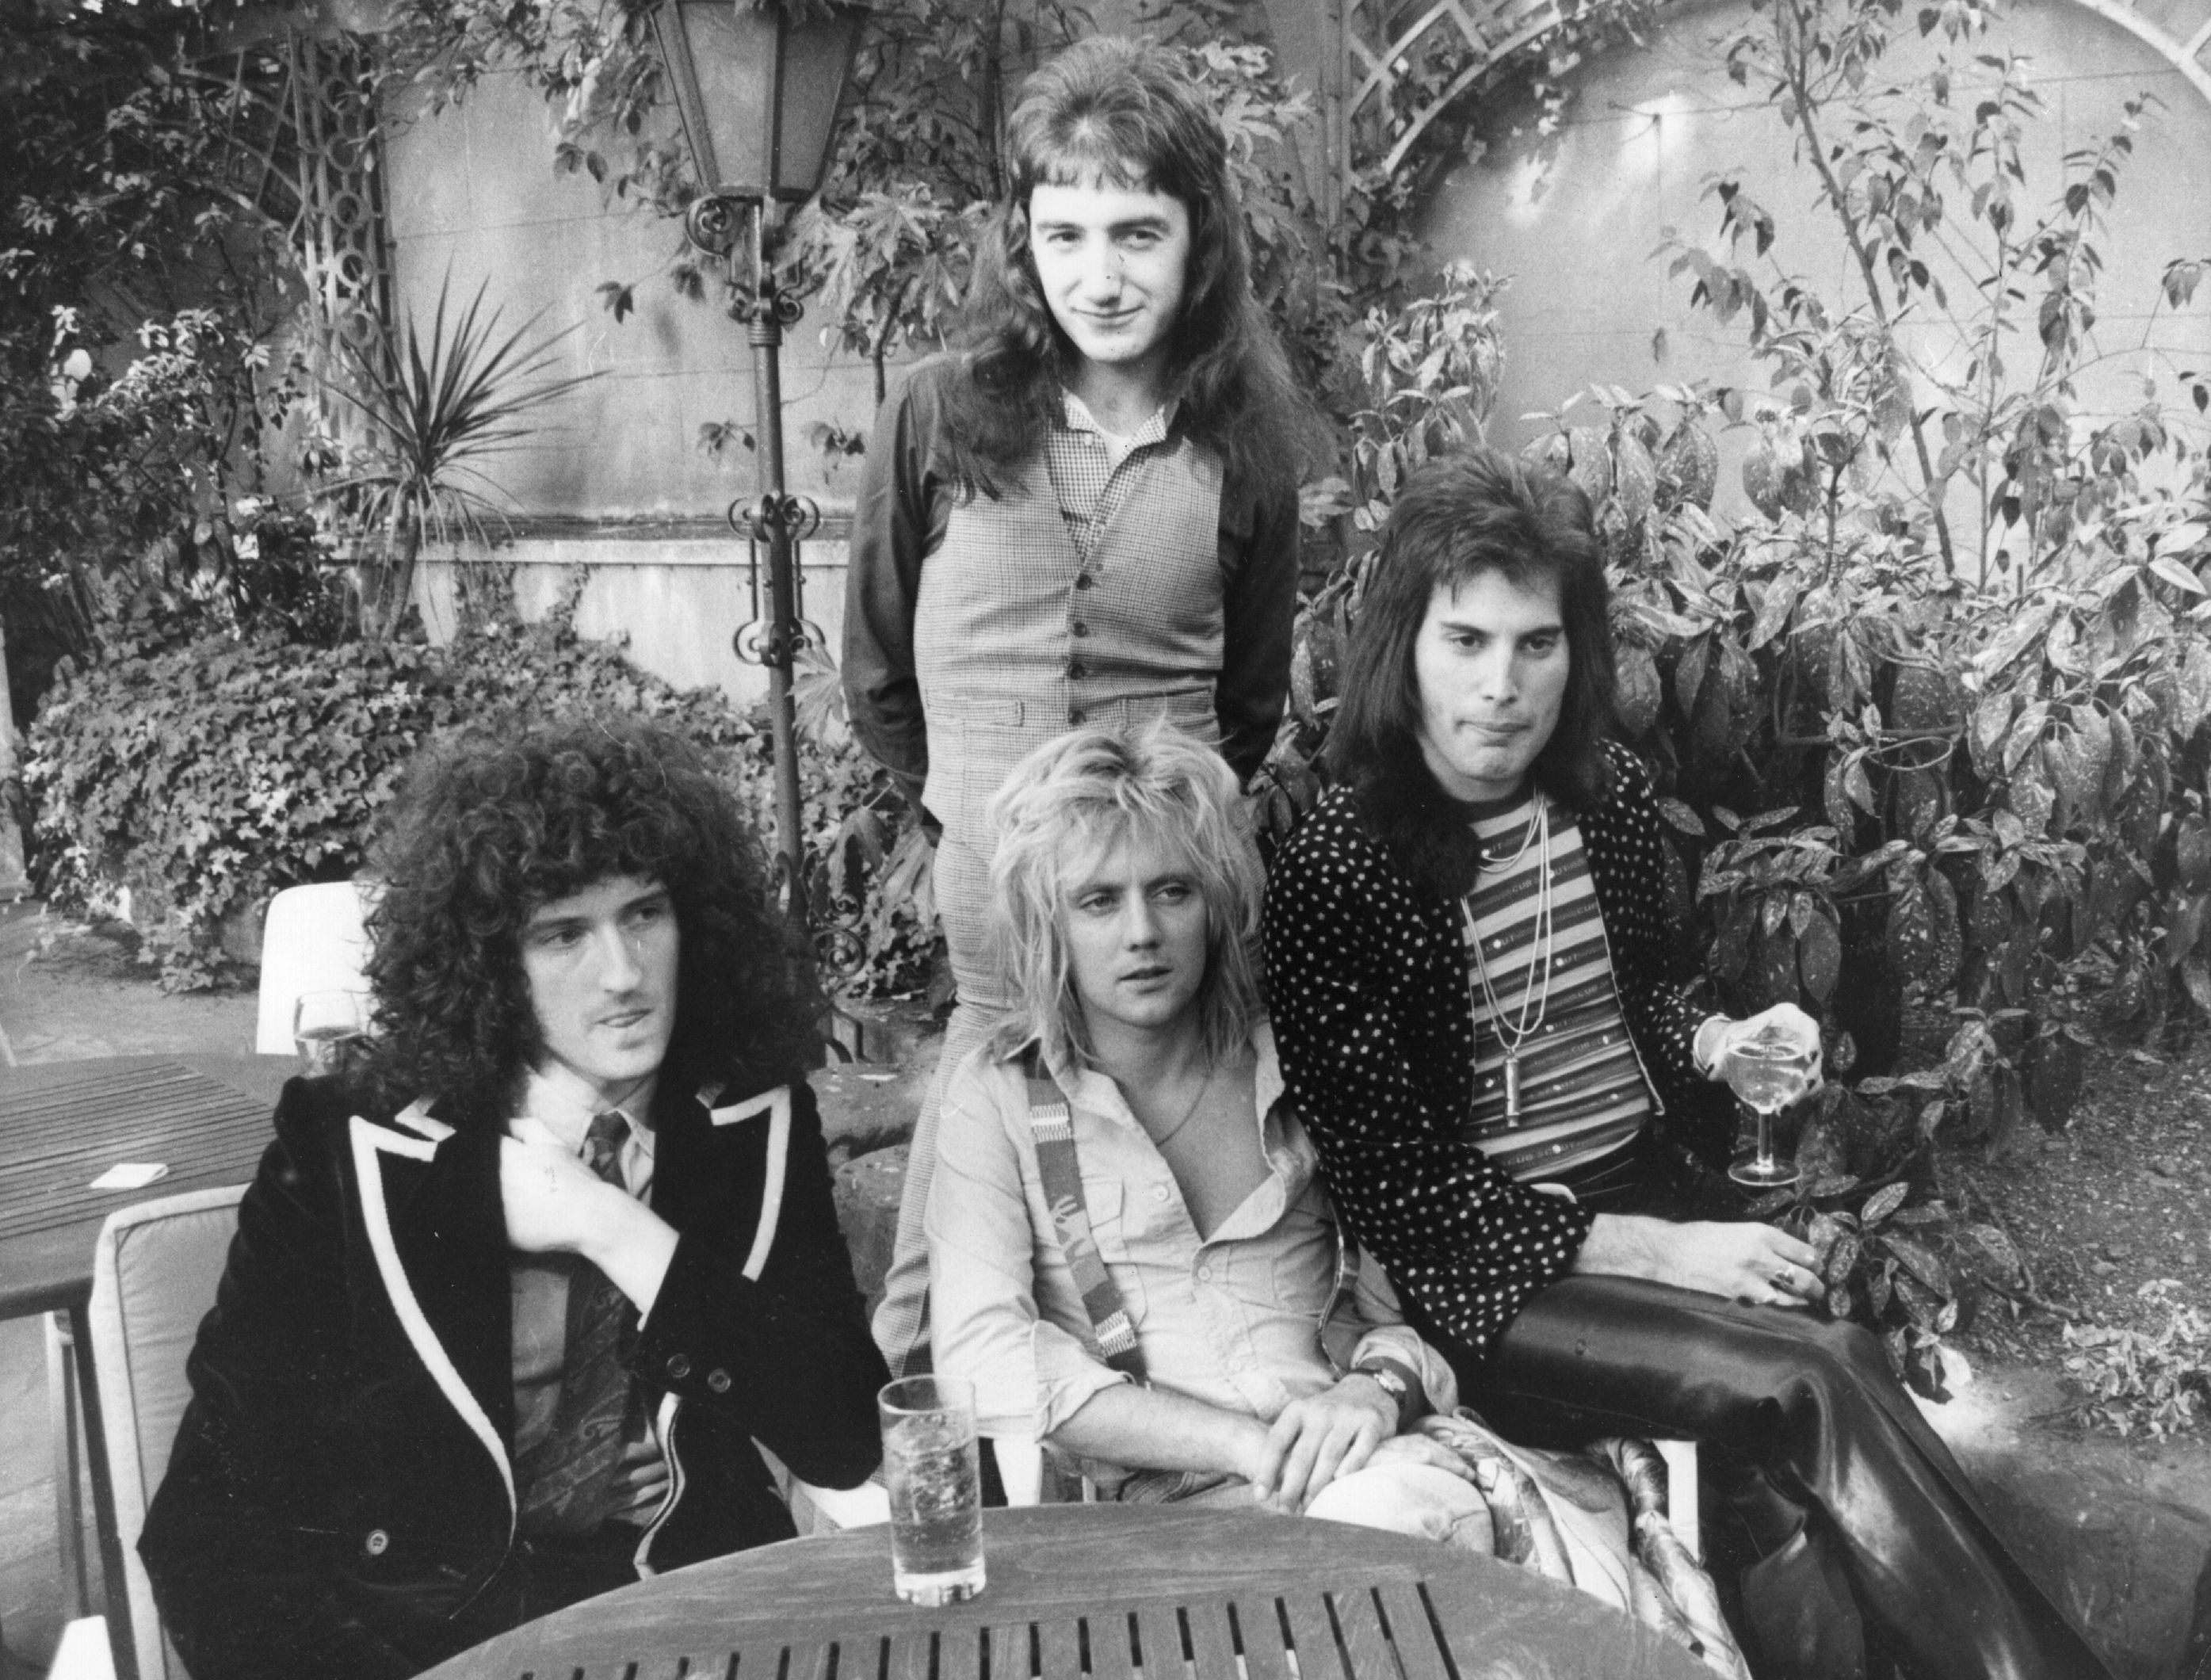 Queen, September 1976. Vlnr.: Brian May, John Deacon (stehend), Roger Taylor and Freddie Mercury (Frederick Bulsara, 1946 - 1991).